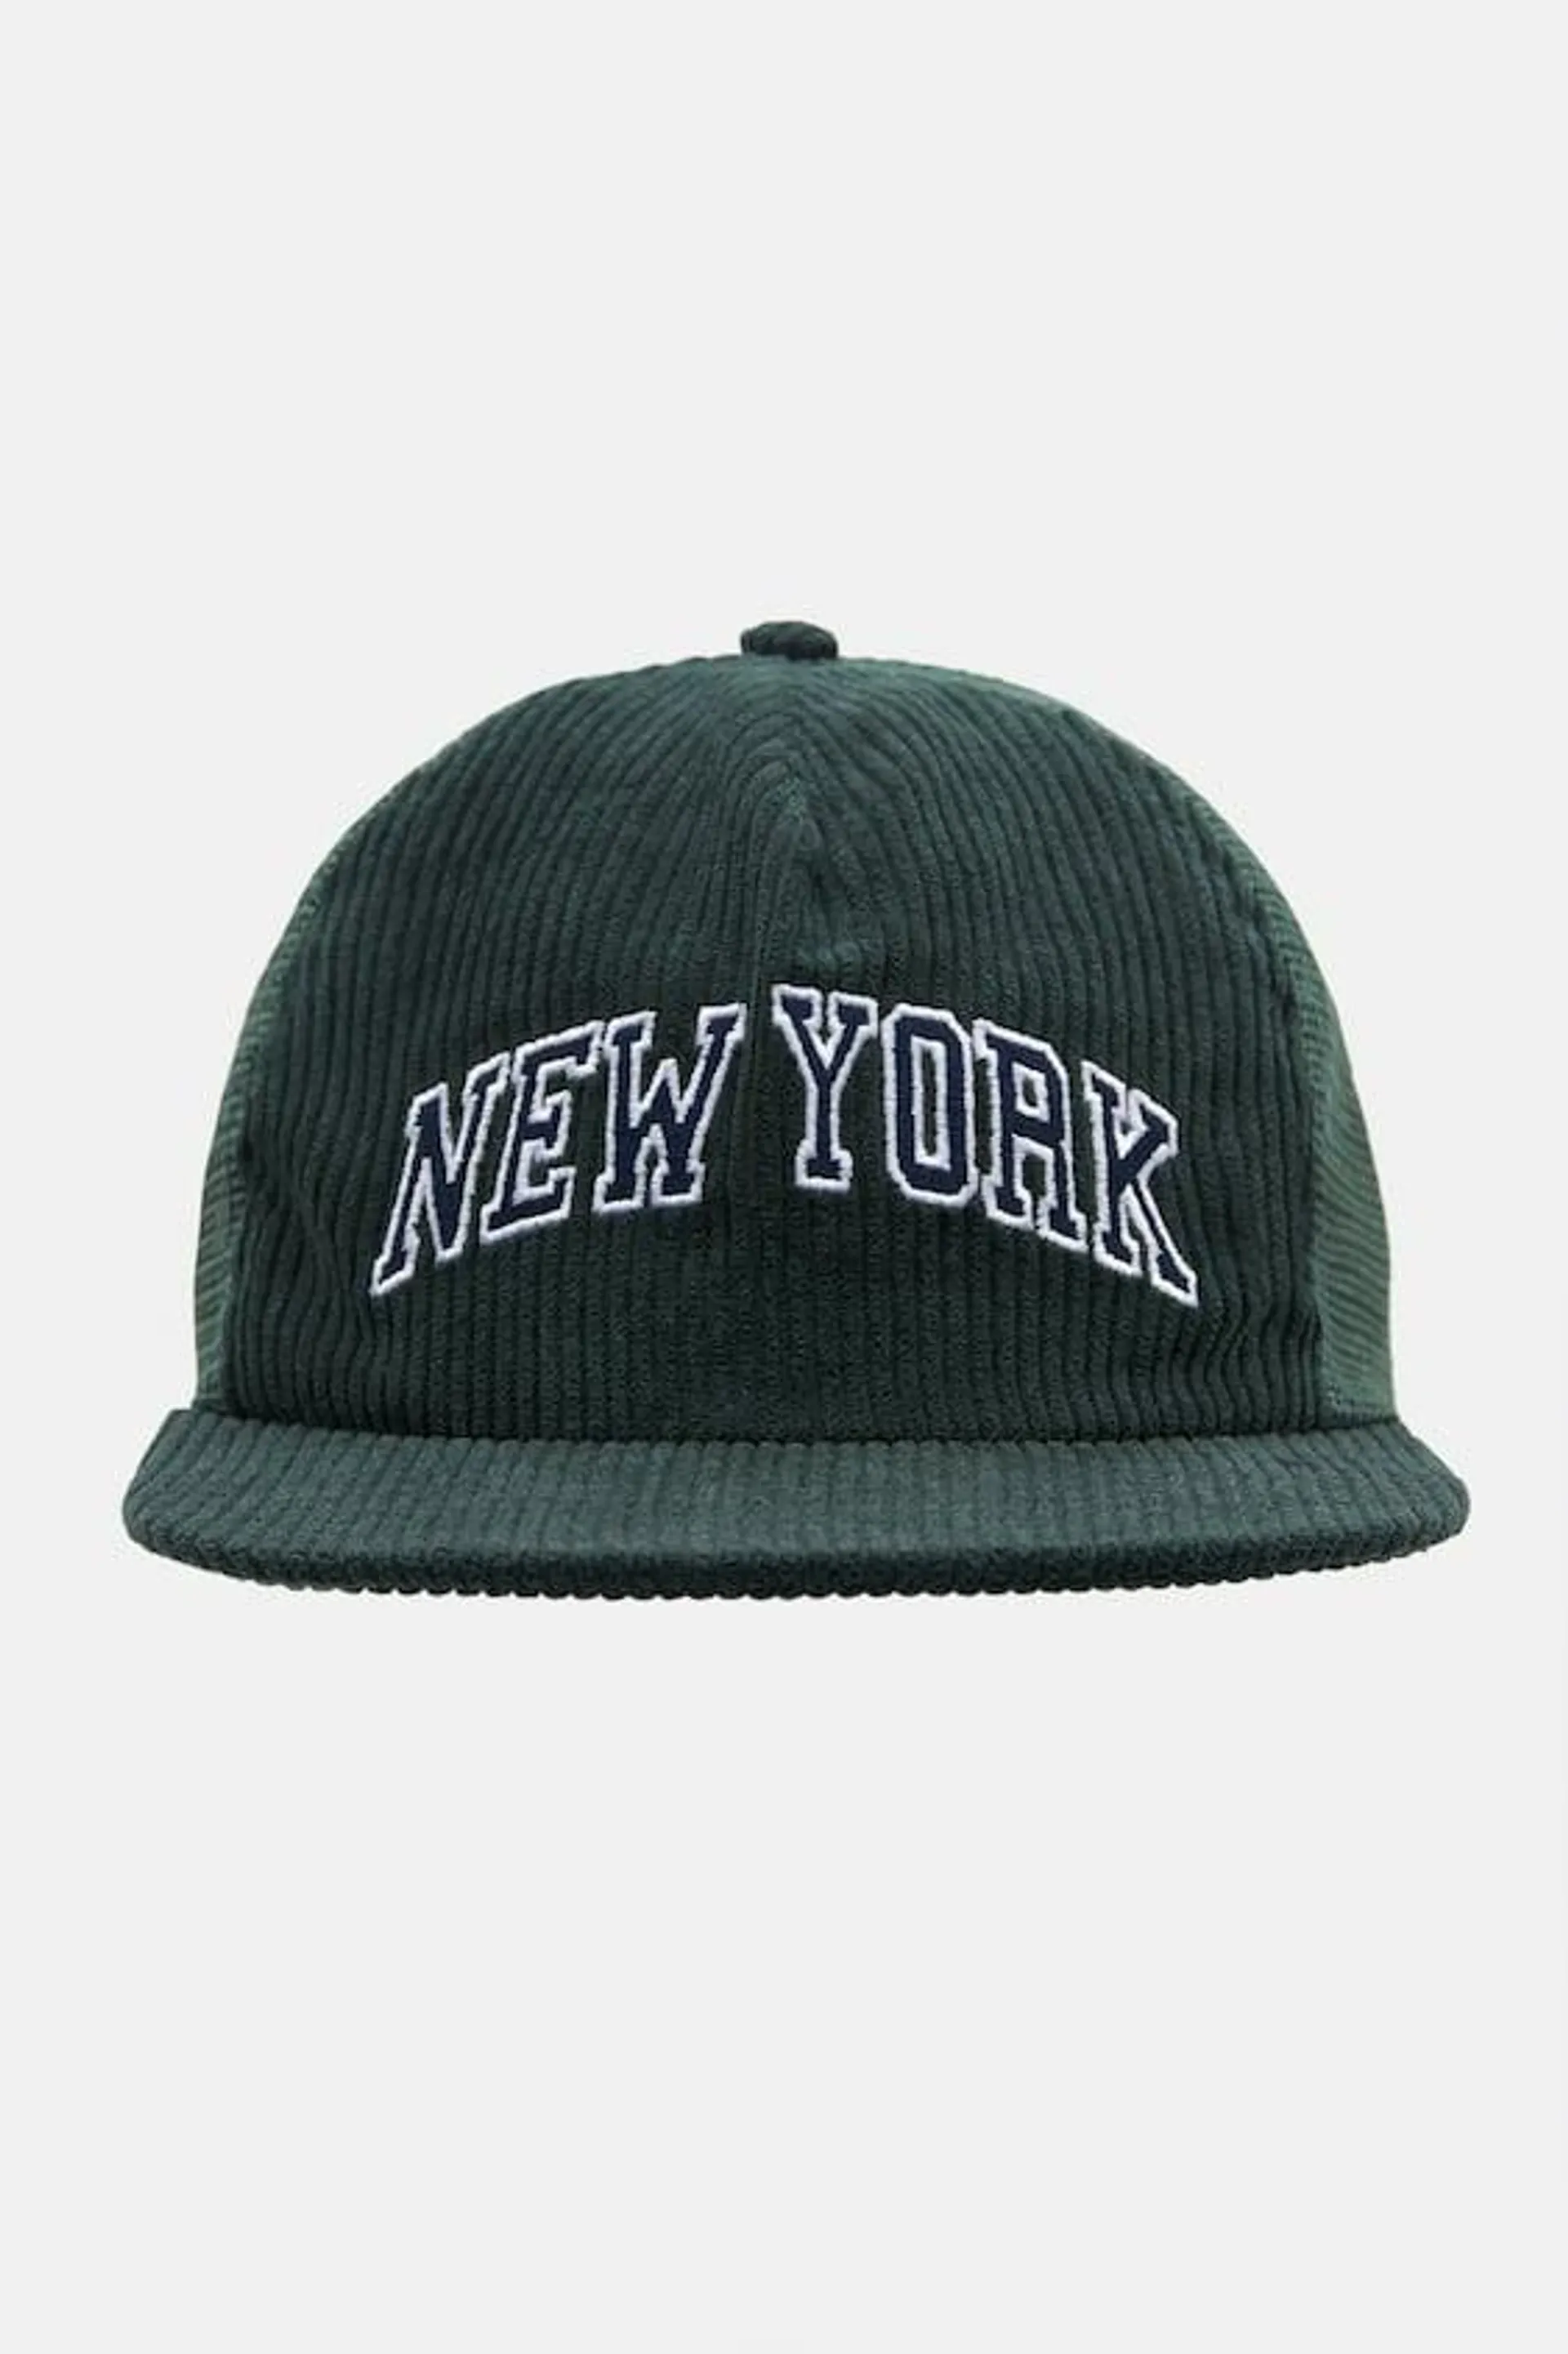 NEW YORK TRUCKER CAP